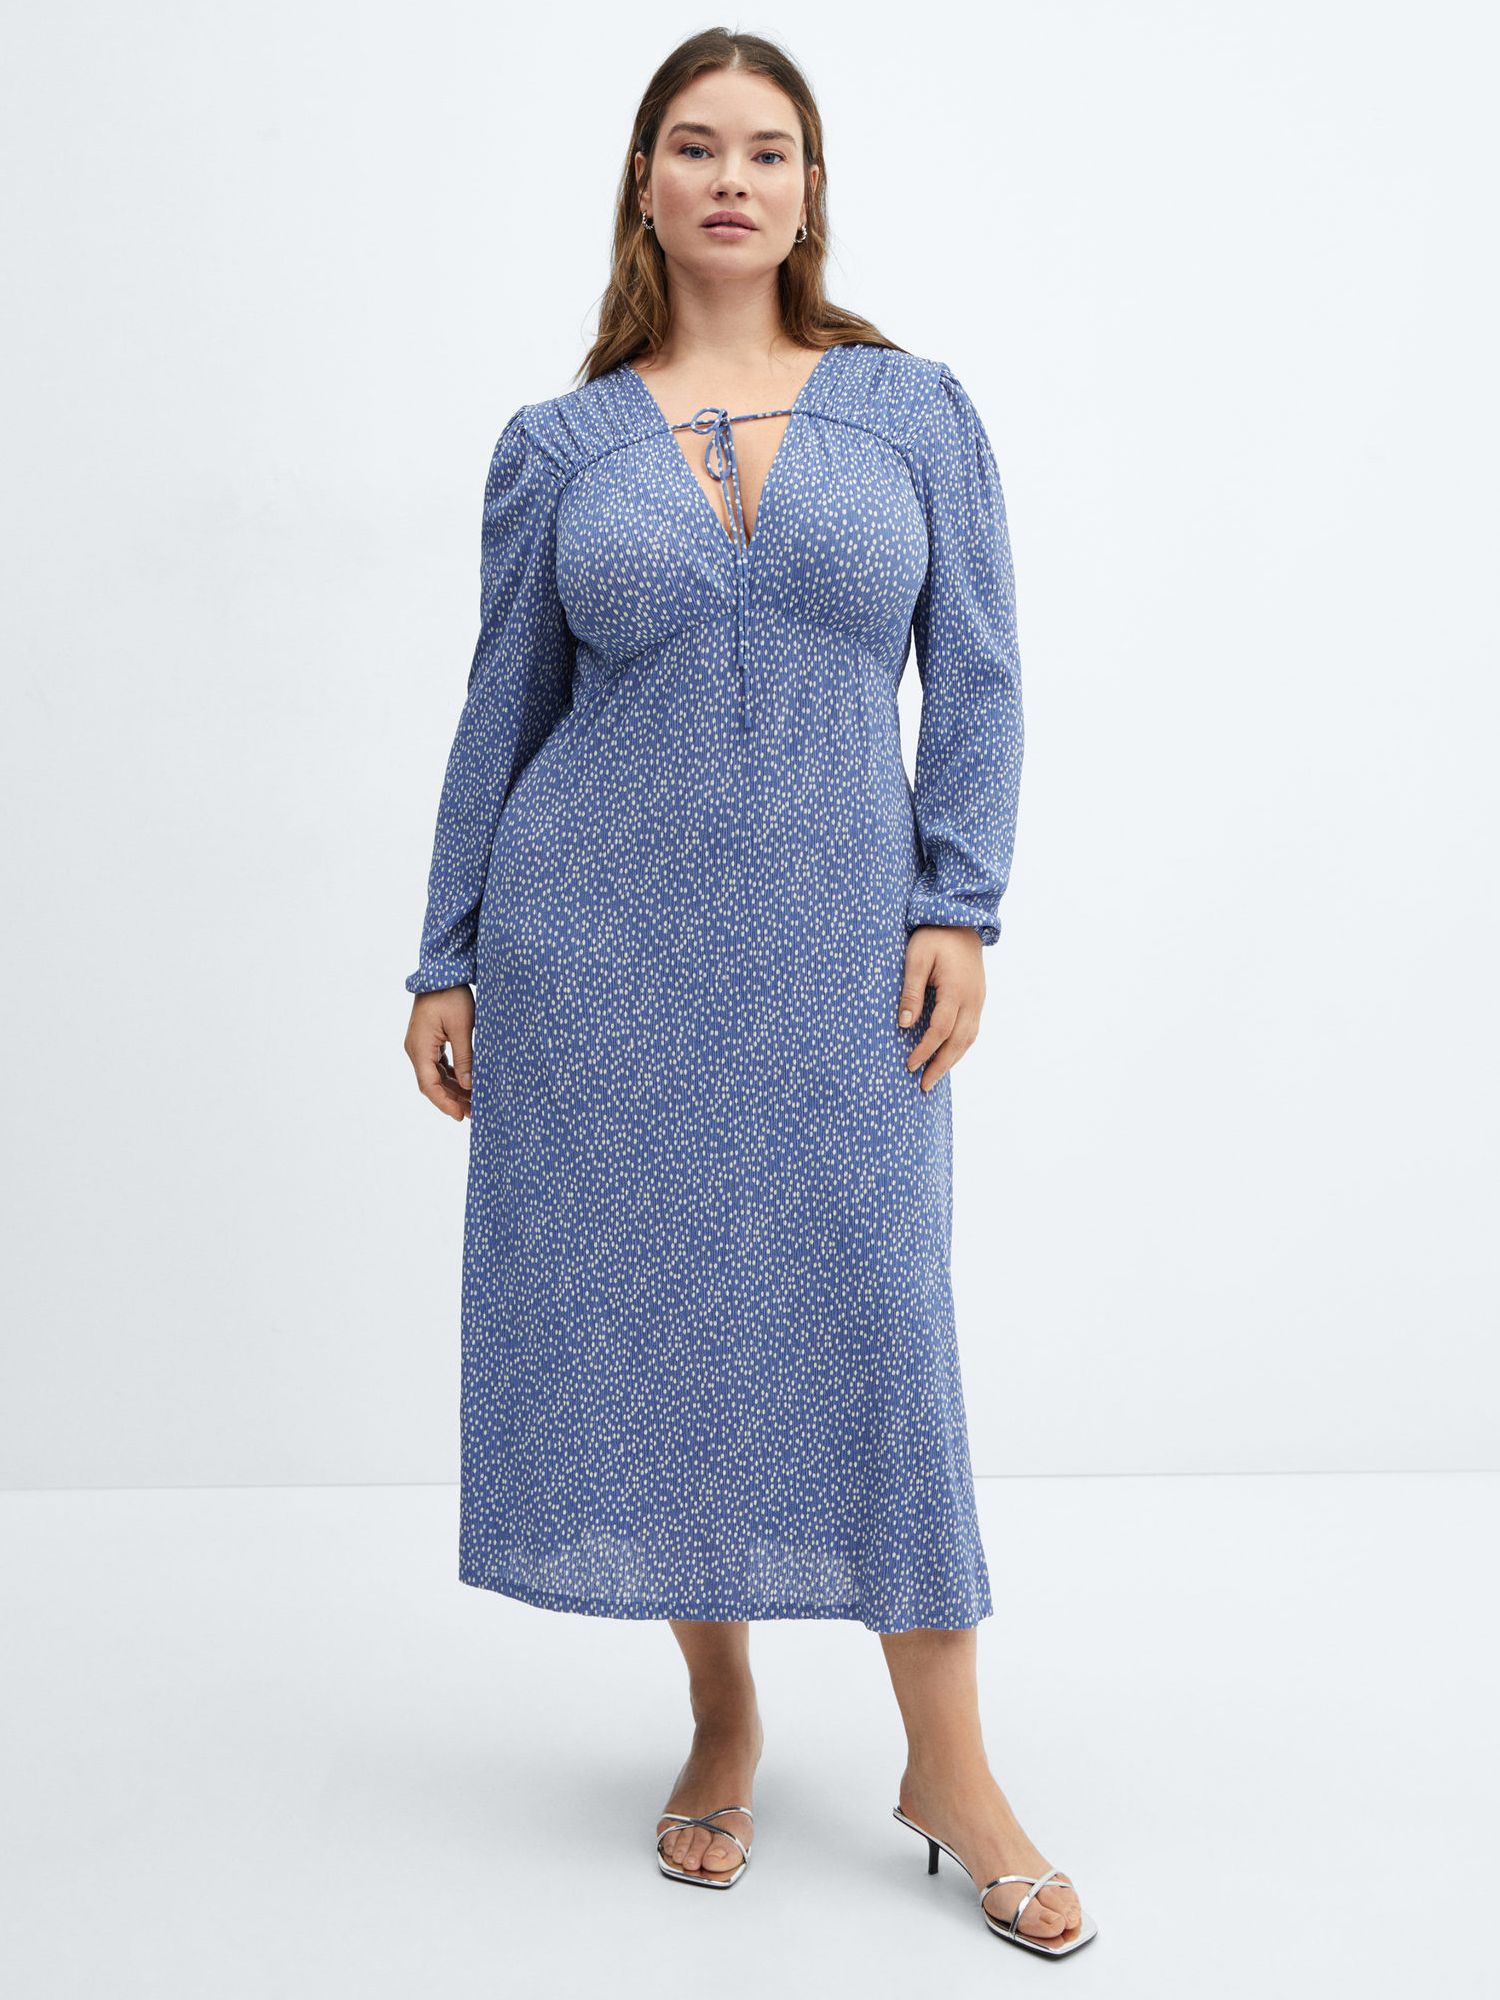 Mango Pomelo Tie Neck Spot Print Midi Dress, Medium Blue, 12